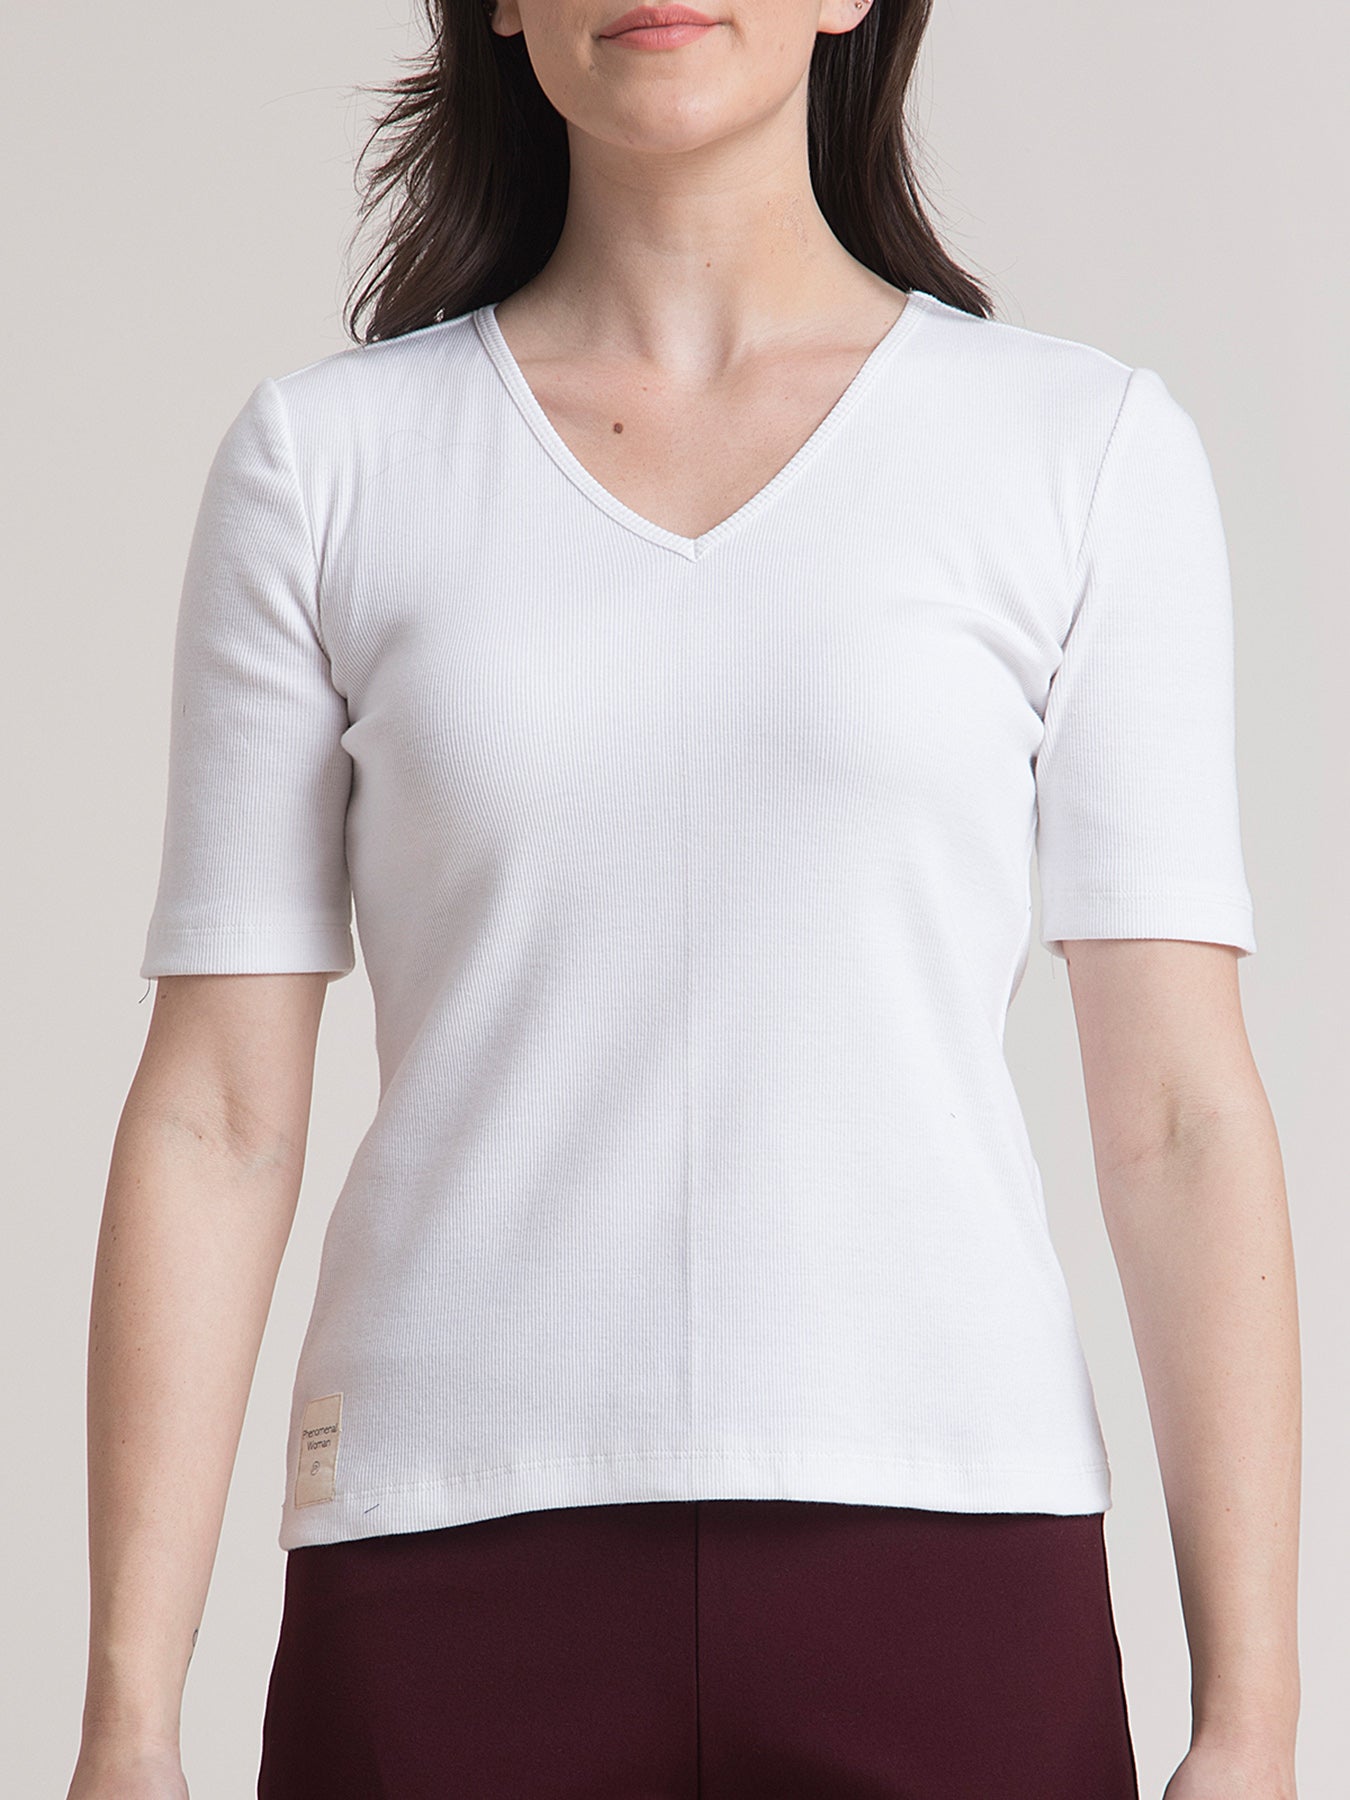 Stretchable V Neck LivIn T Shirt - White